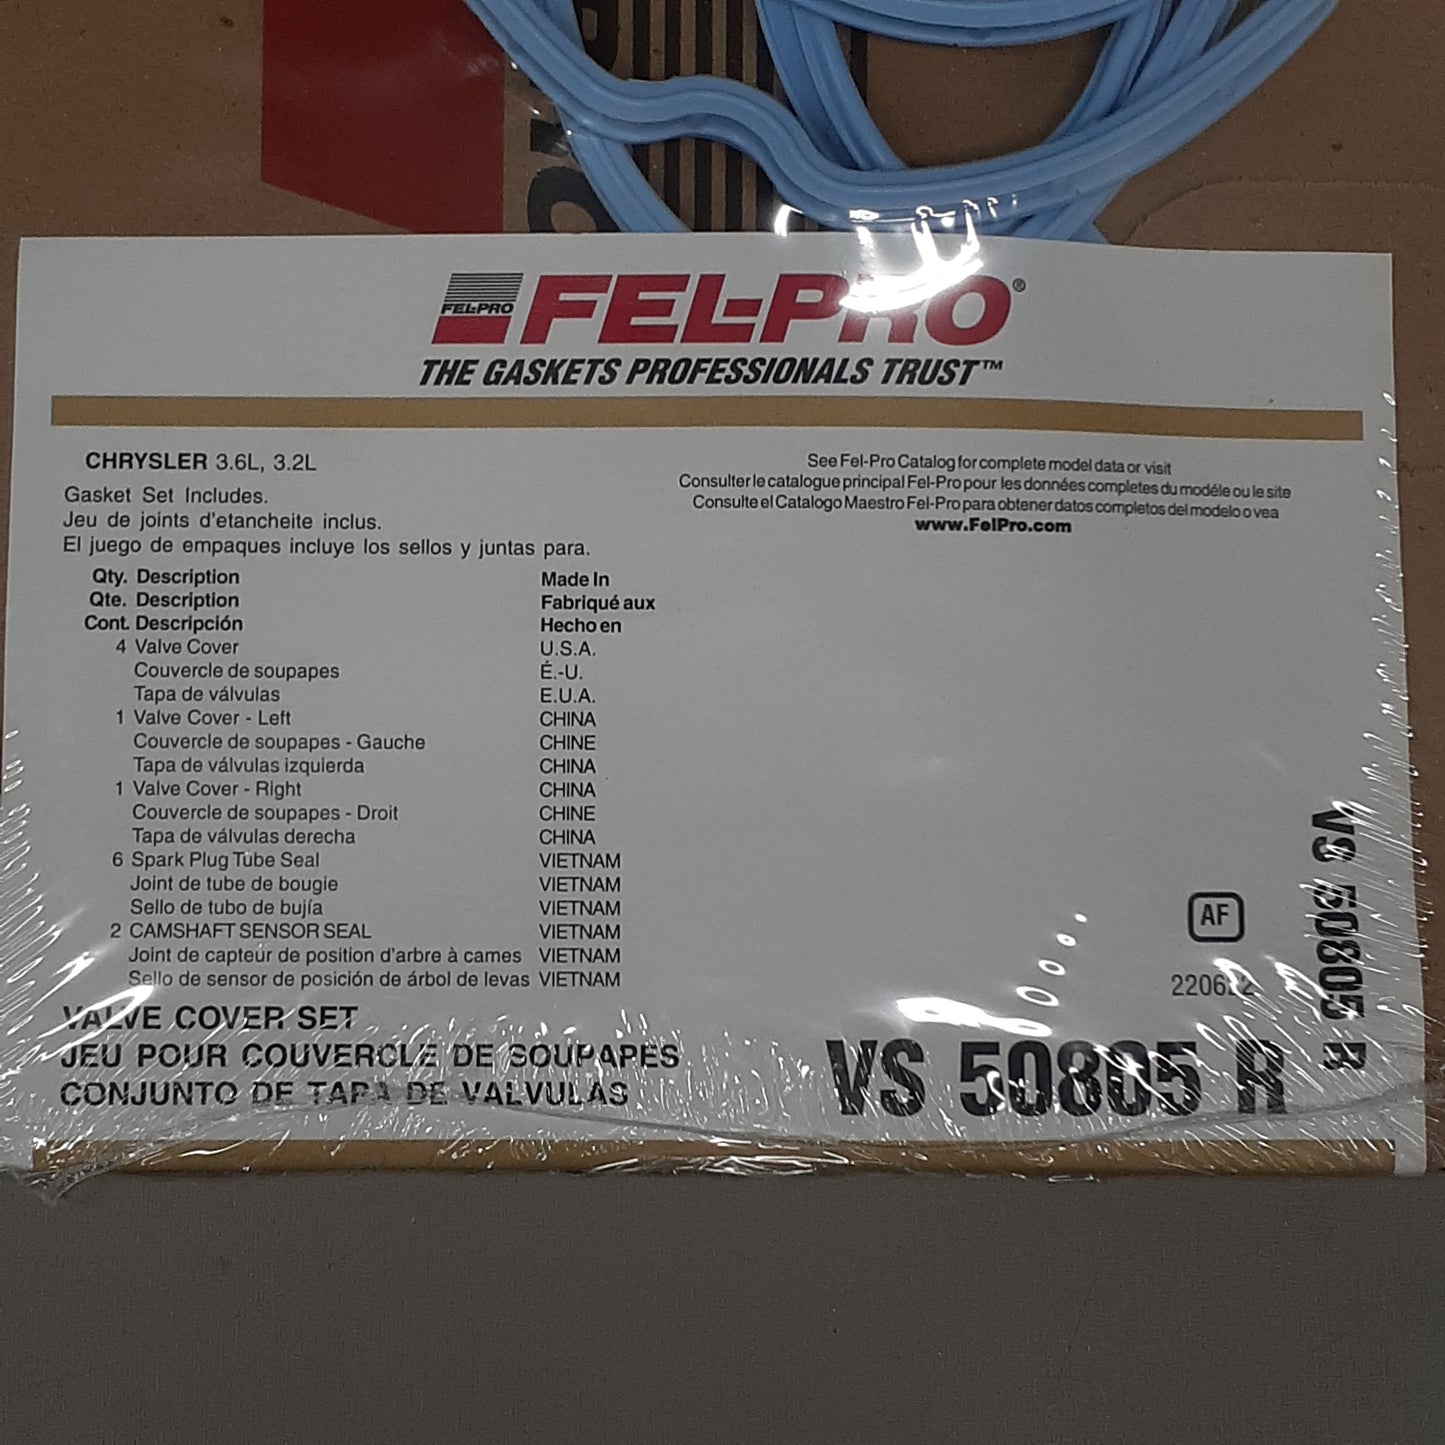 FEL-PRO Valve Cover Gasket Set VS 50805 R (New)